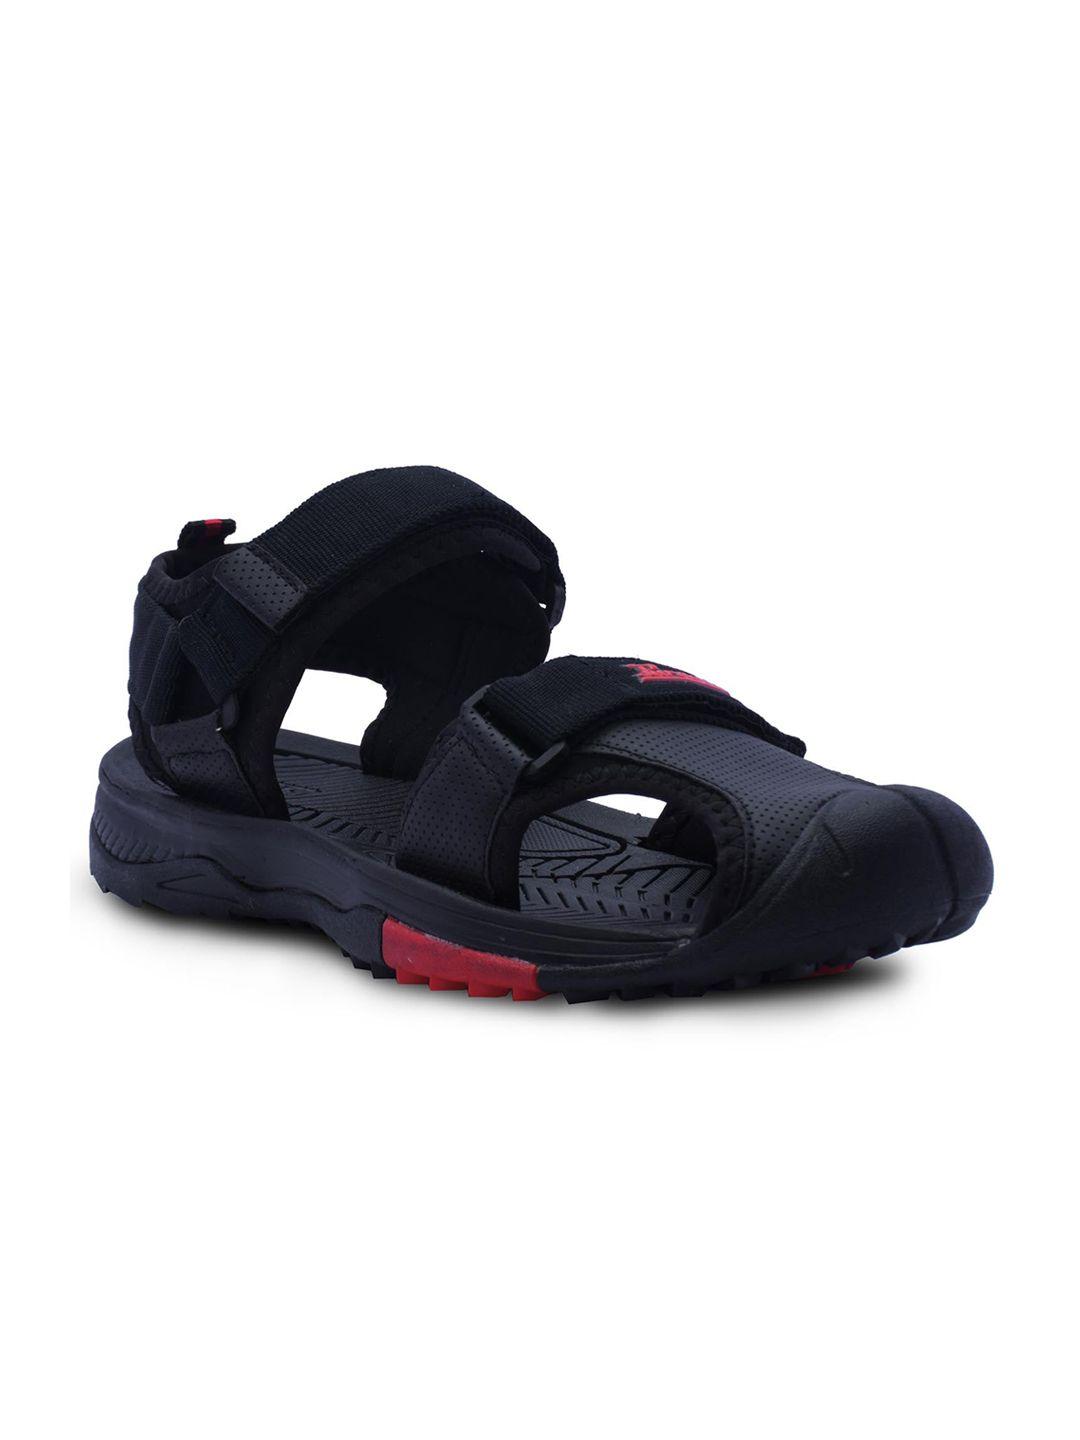 paragon-men-velcro-casual-comfort-sandals